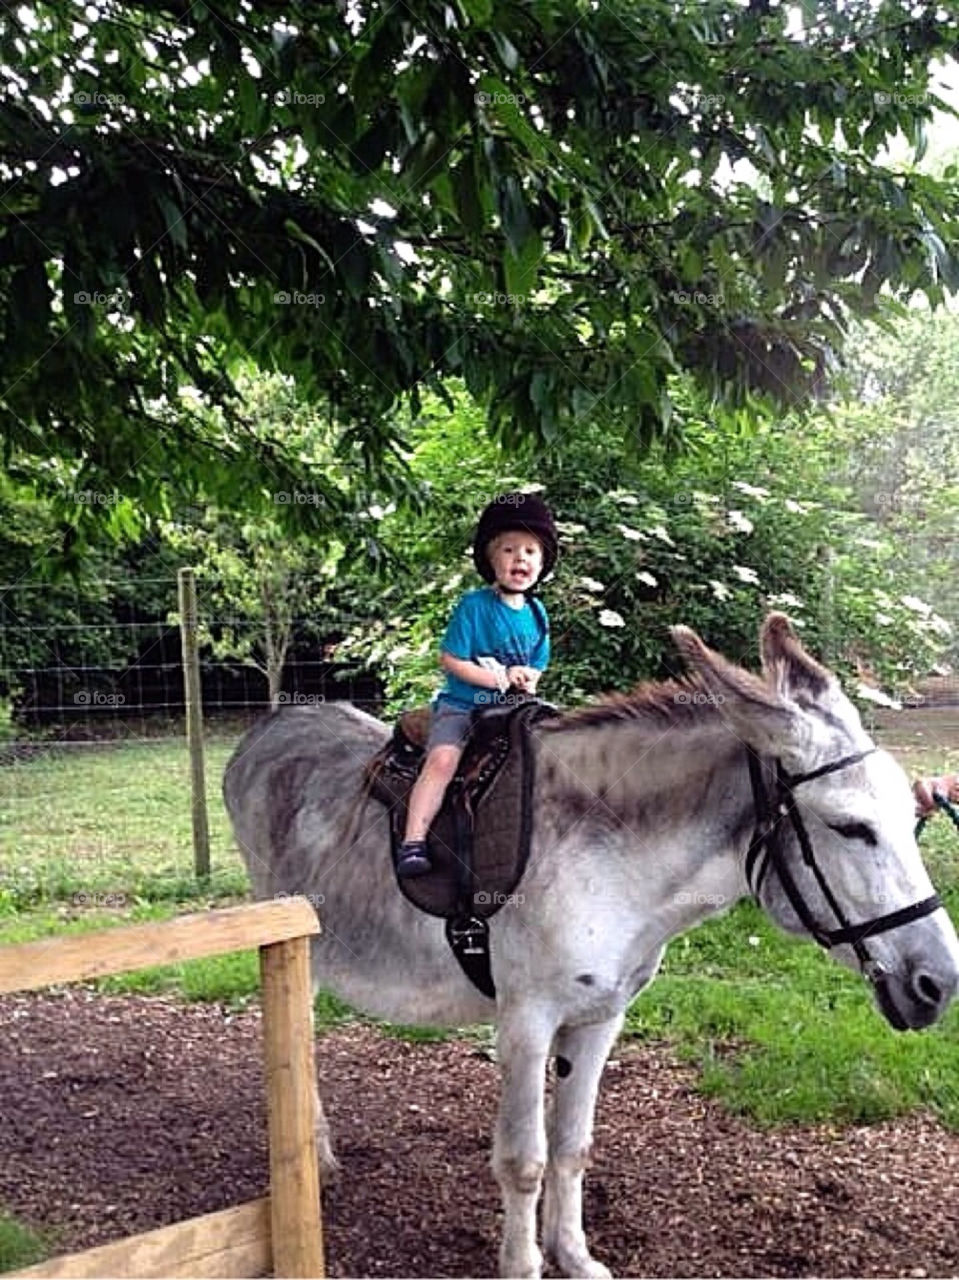 Small boy on donkey.